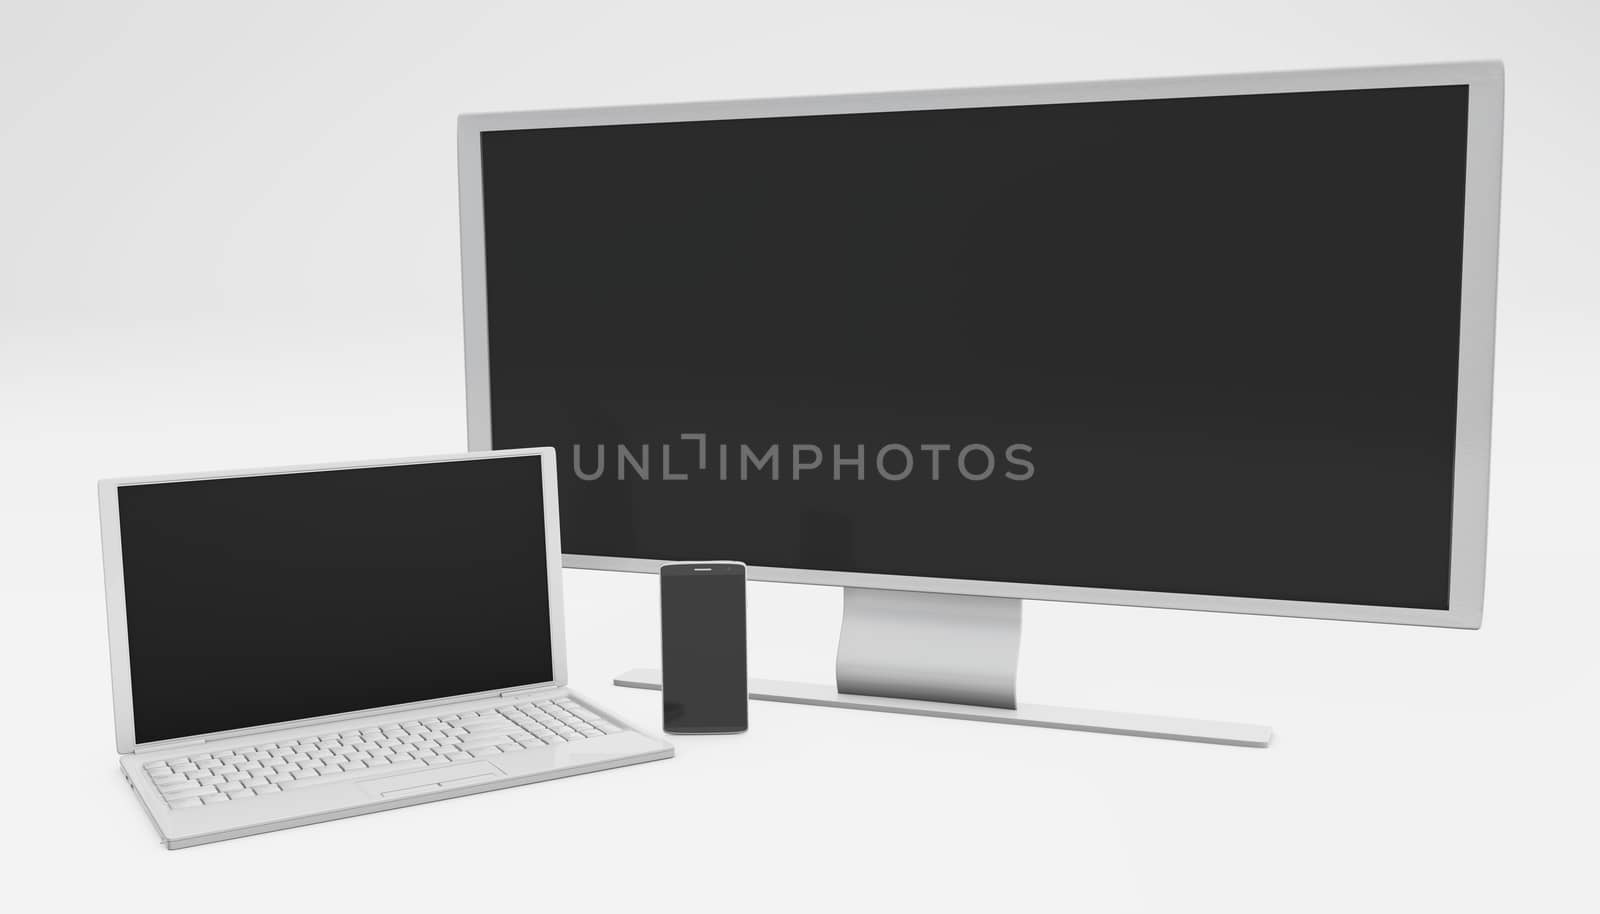 Multi platoform concept telco bundle wide tv laptop smartphone 3 by F1b0nacci